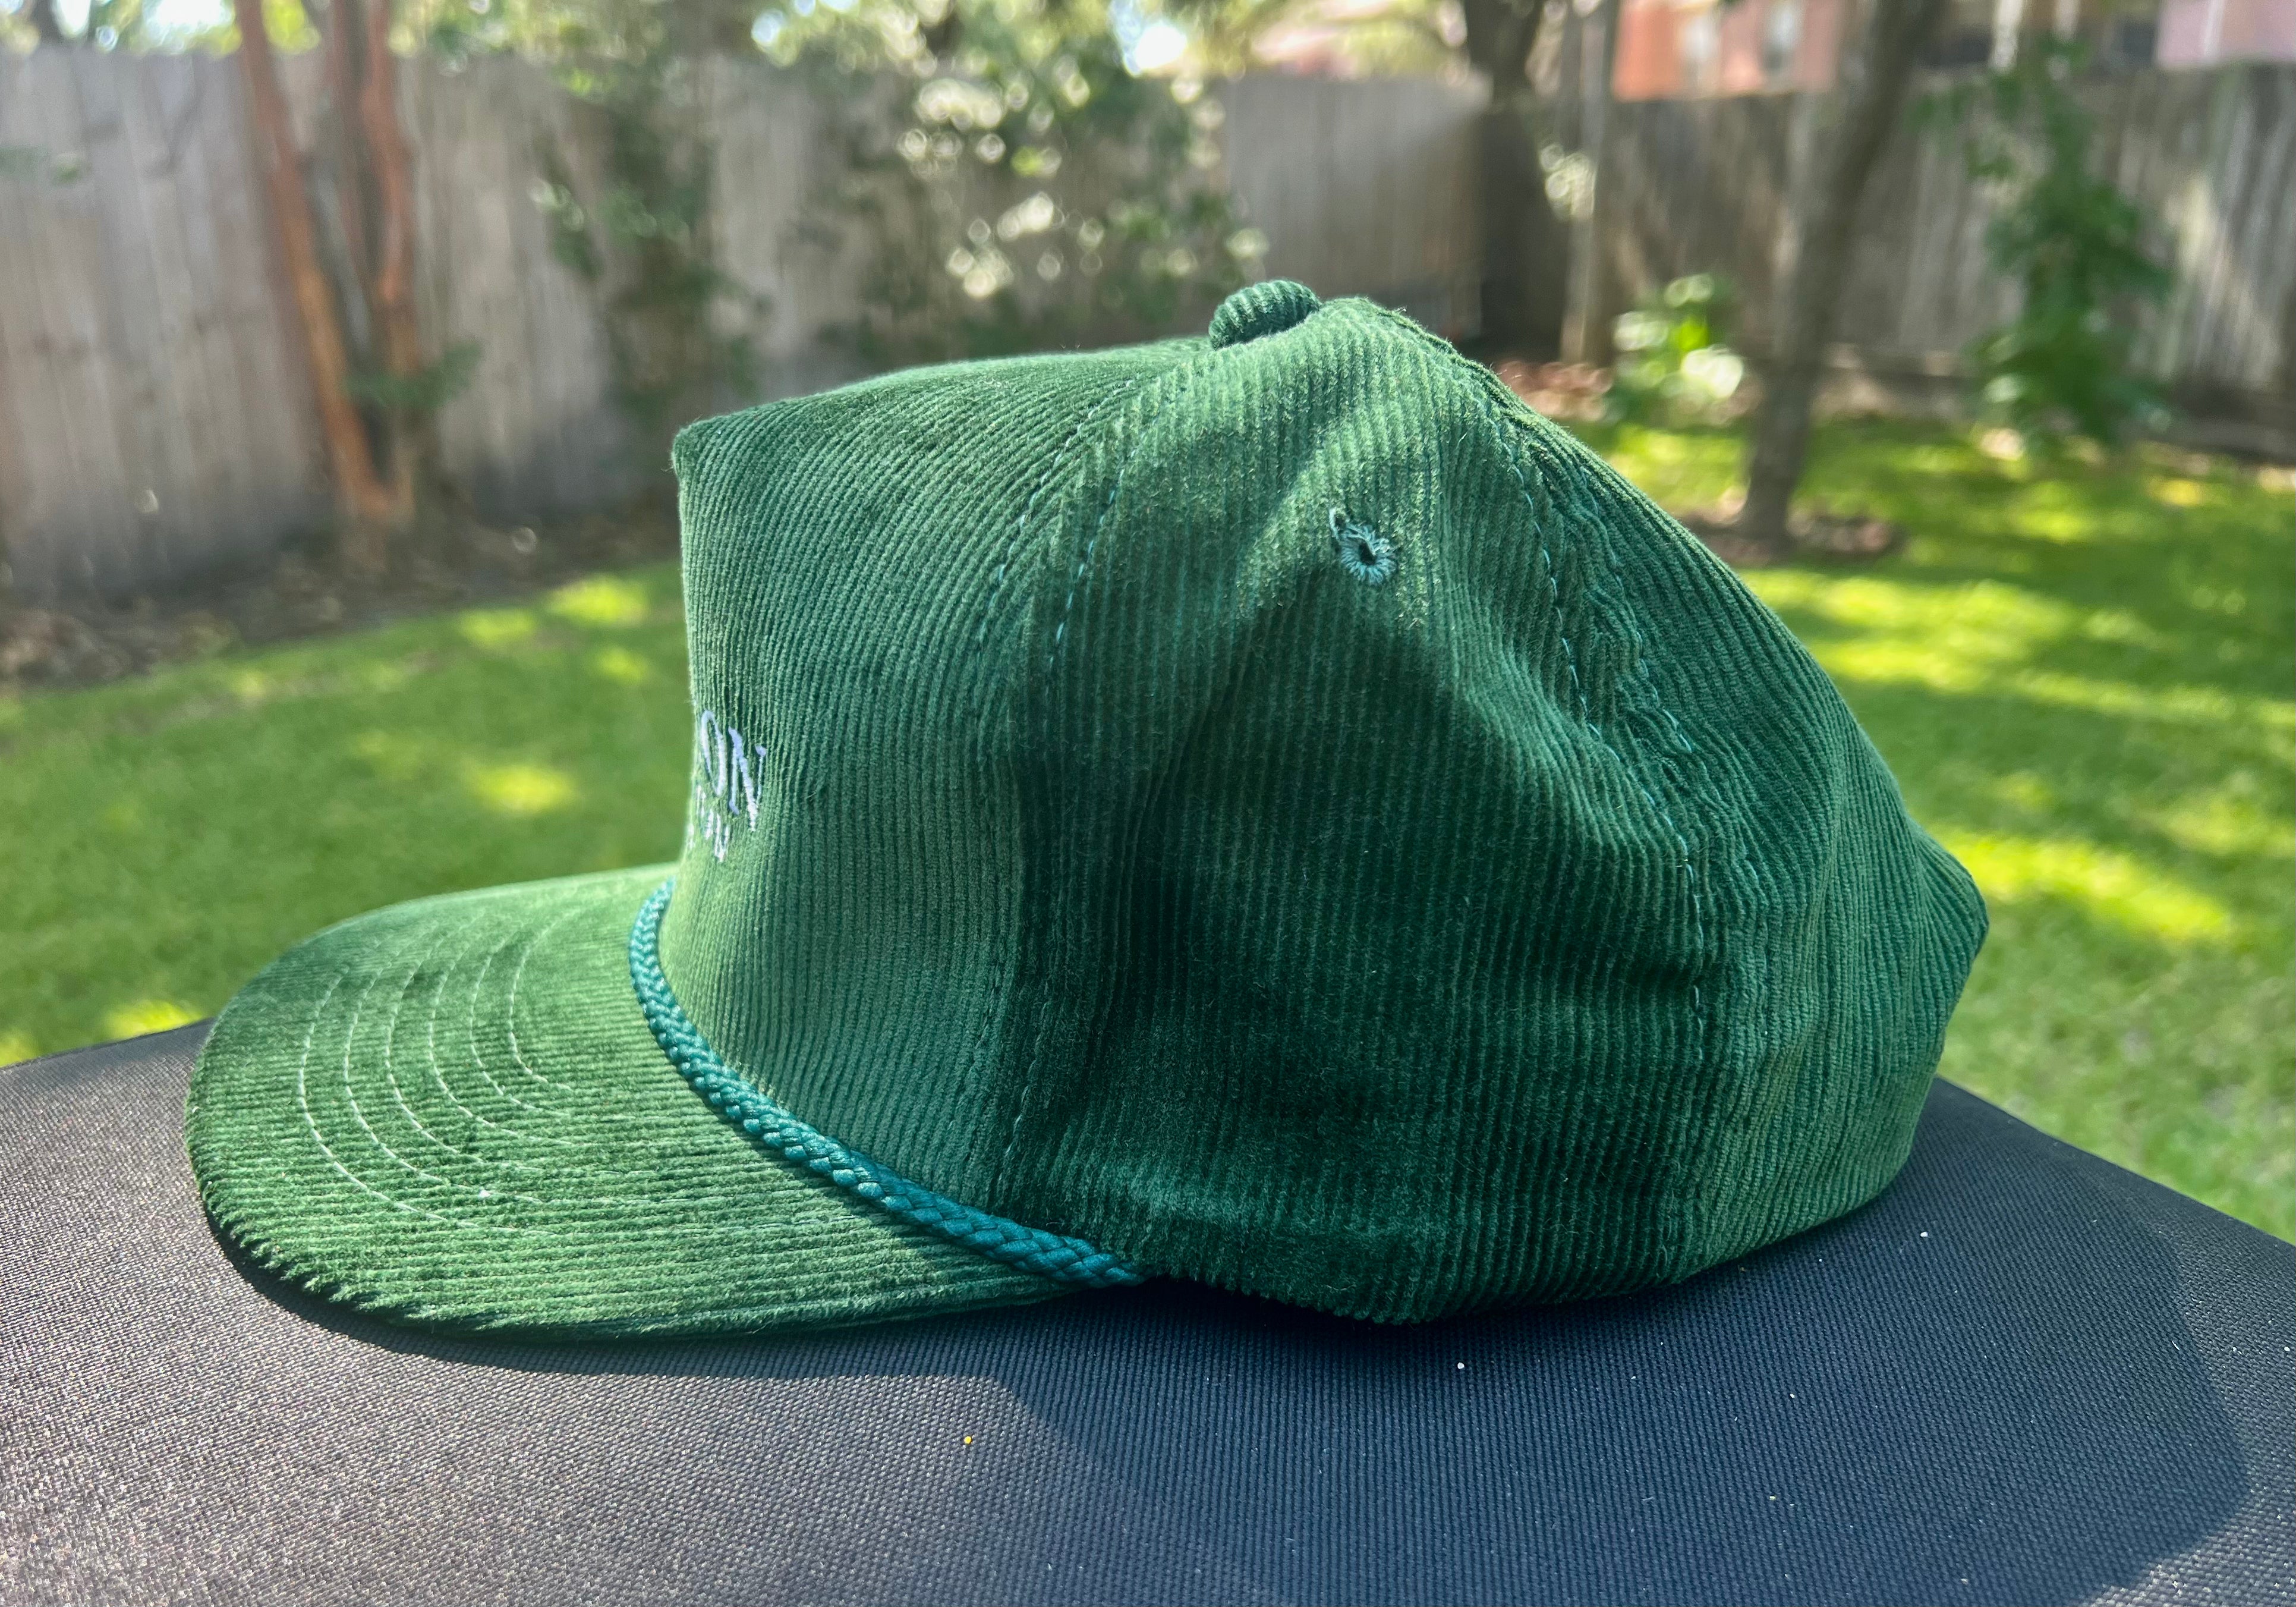 Houston Retro US Golf Hat - Corduroy